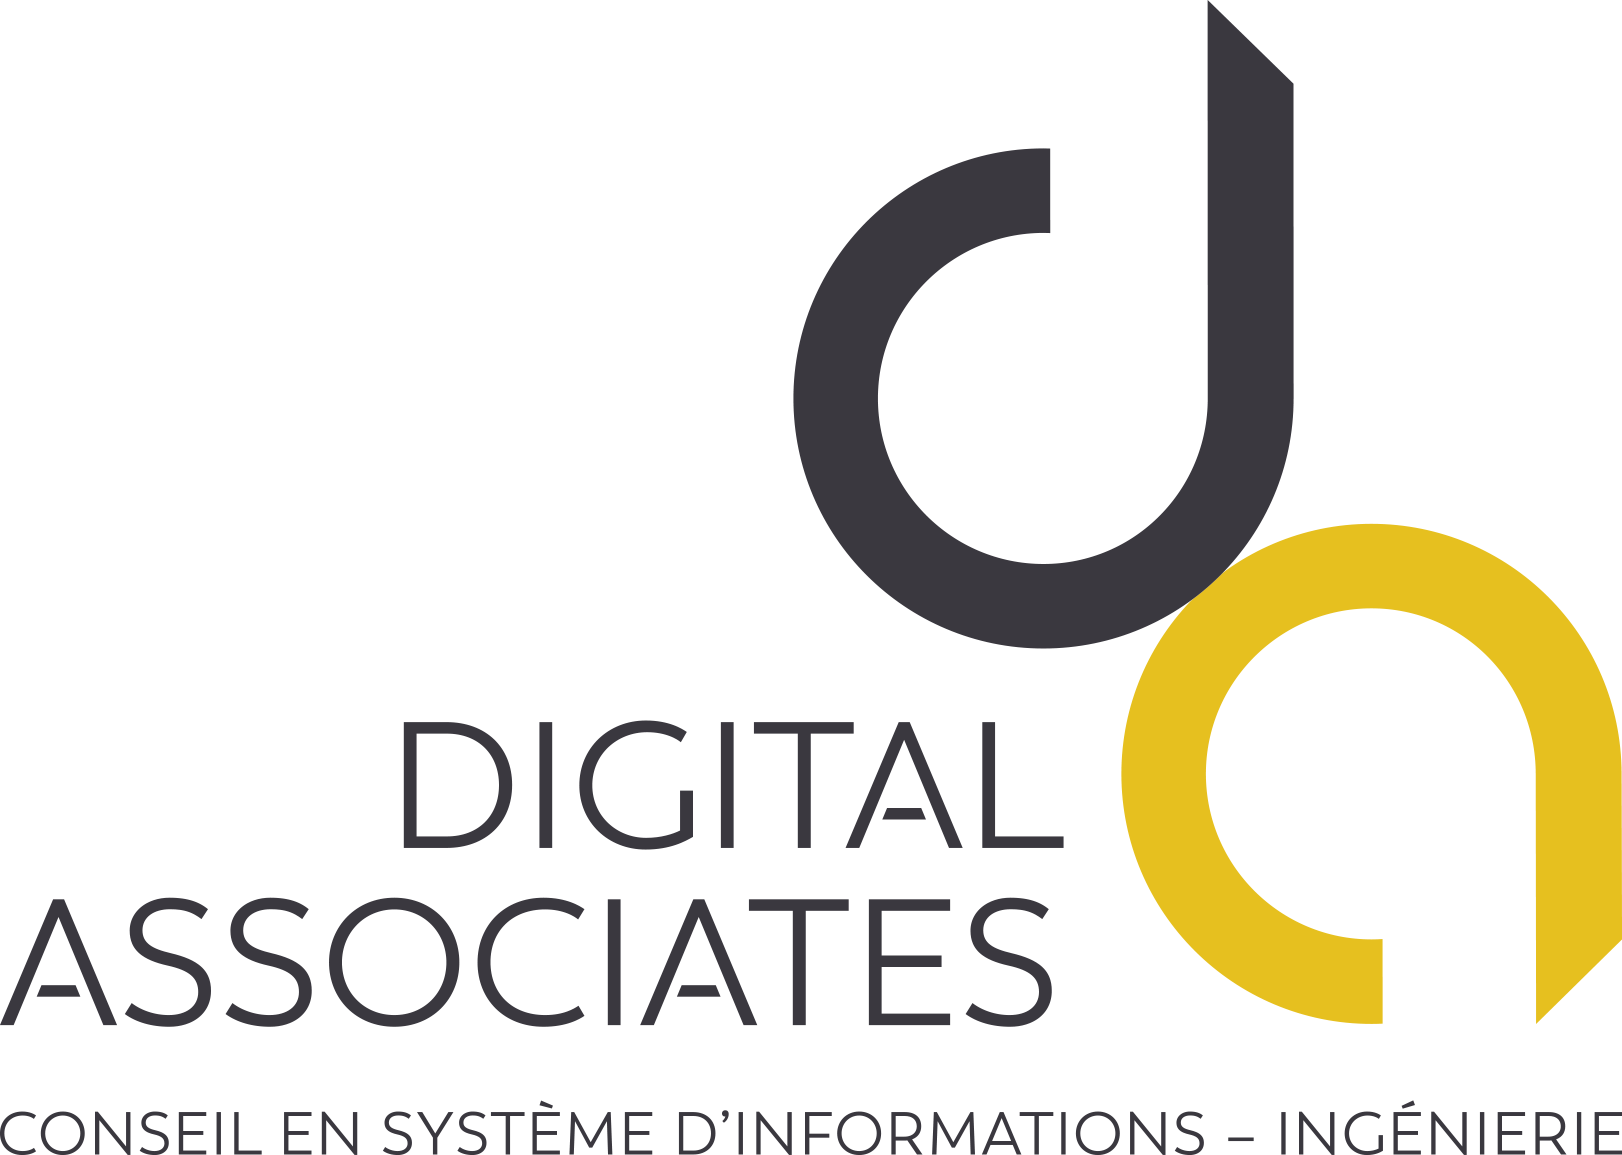 Digital Associates